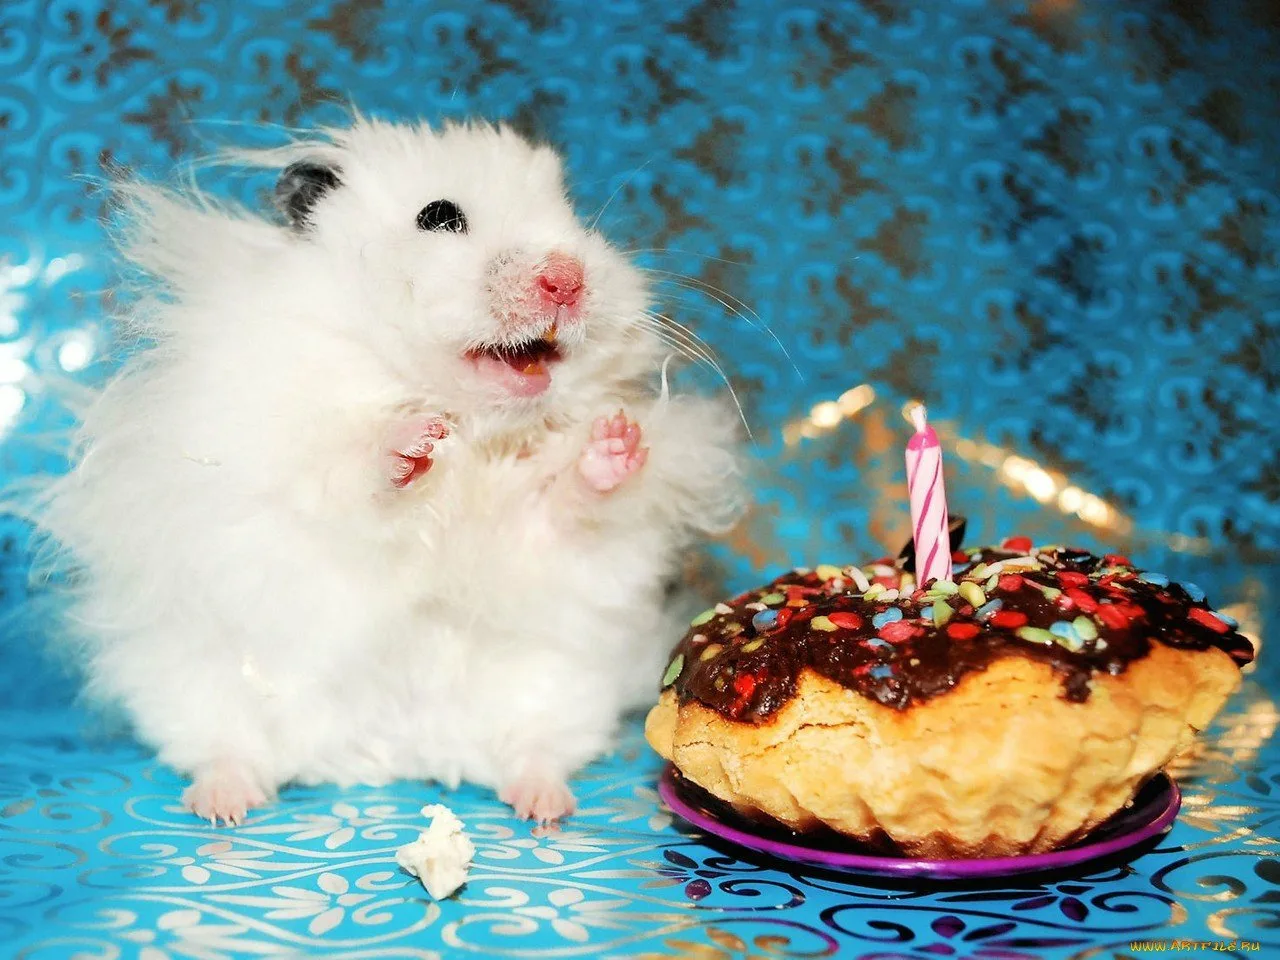 Поздравление хомяка. С днем рождения хомяк. Тортики с хомячками. Хомяк с тортиком. Хомяк поздравляет с днем рождения.